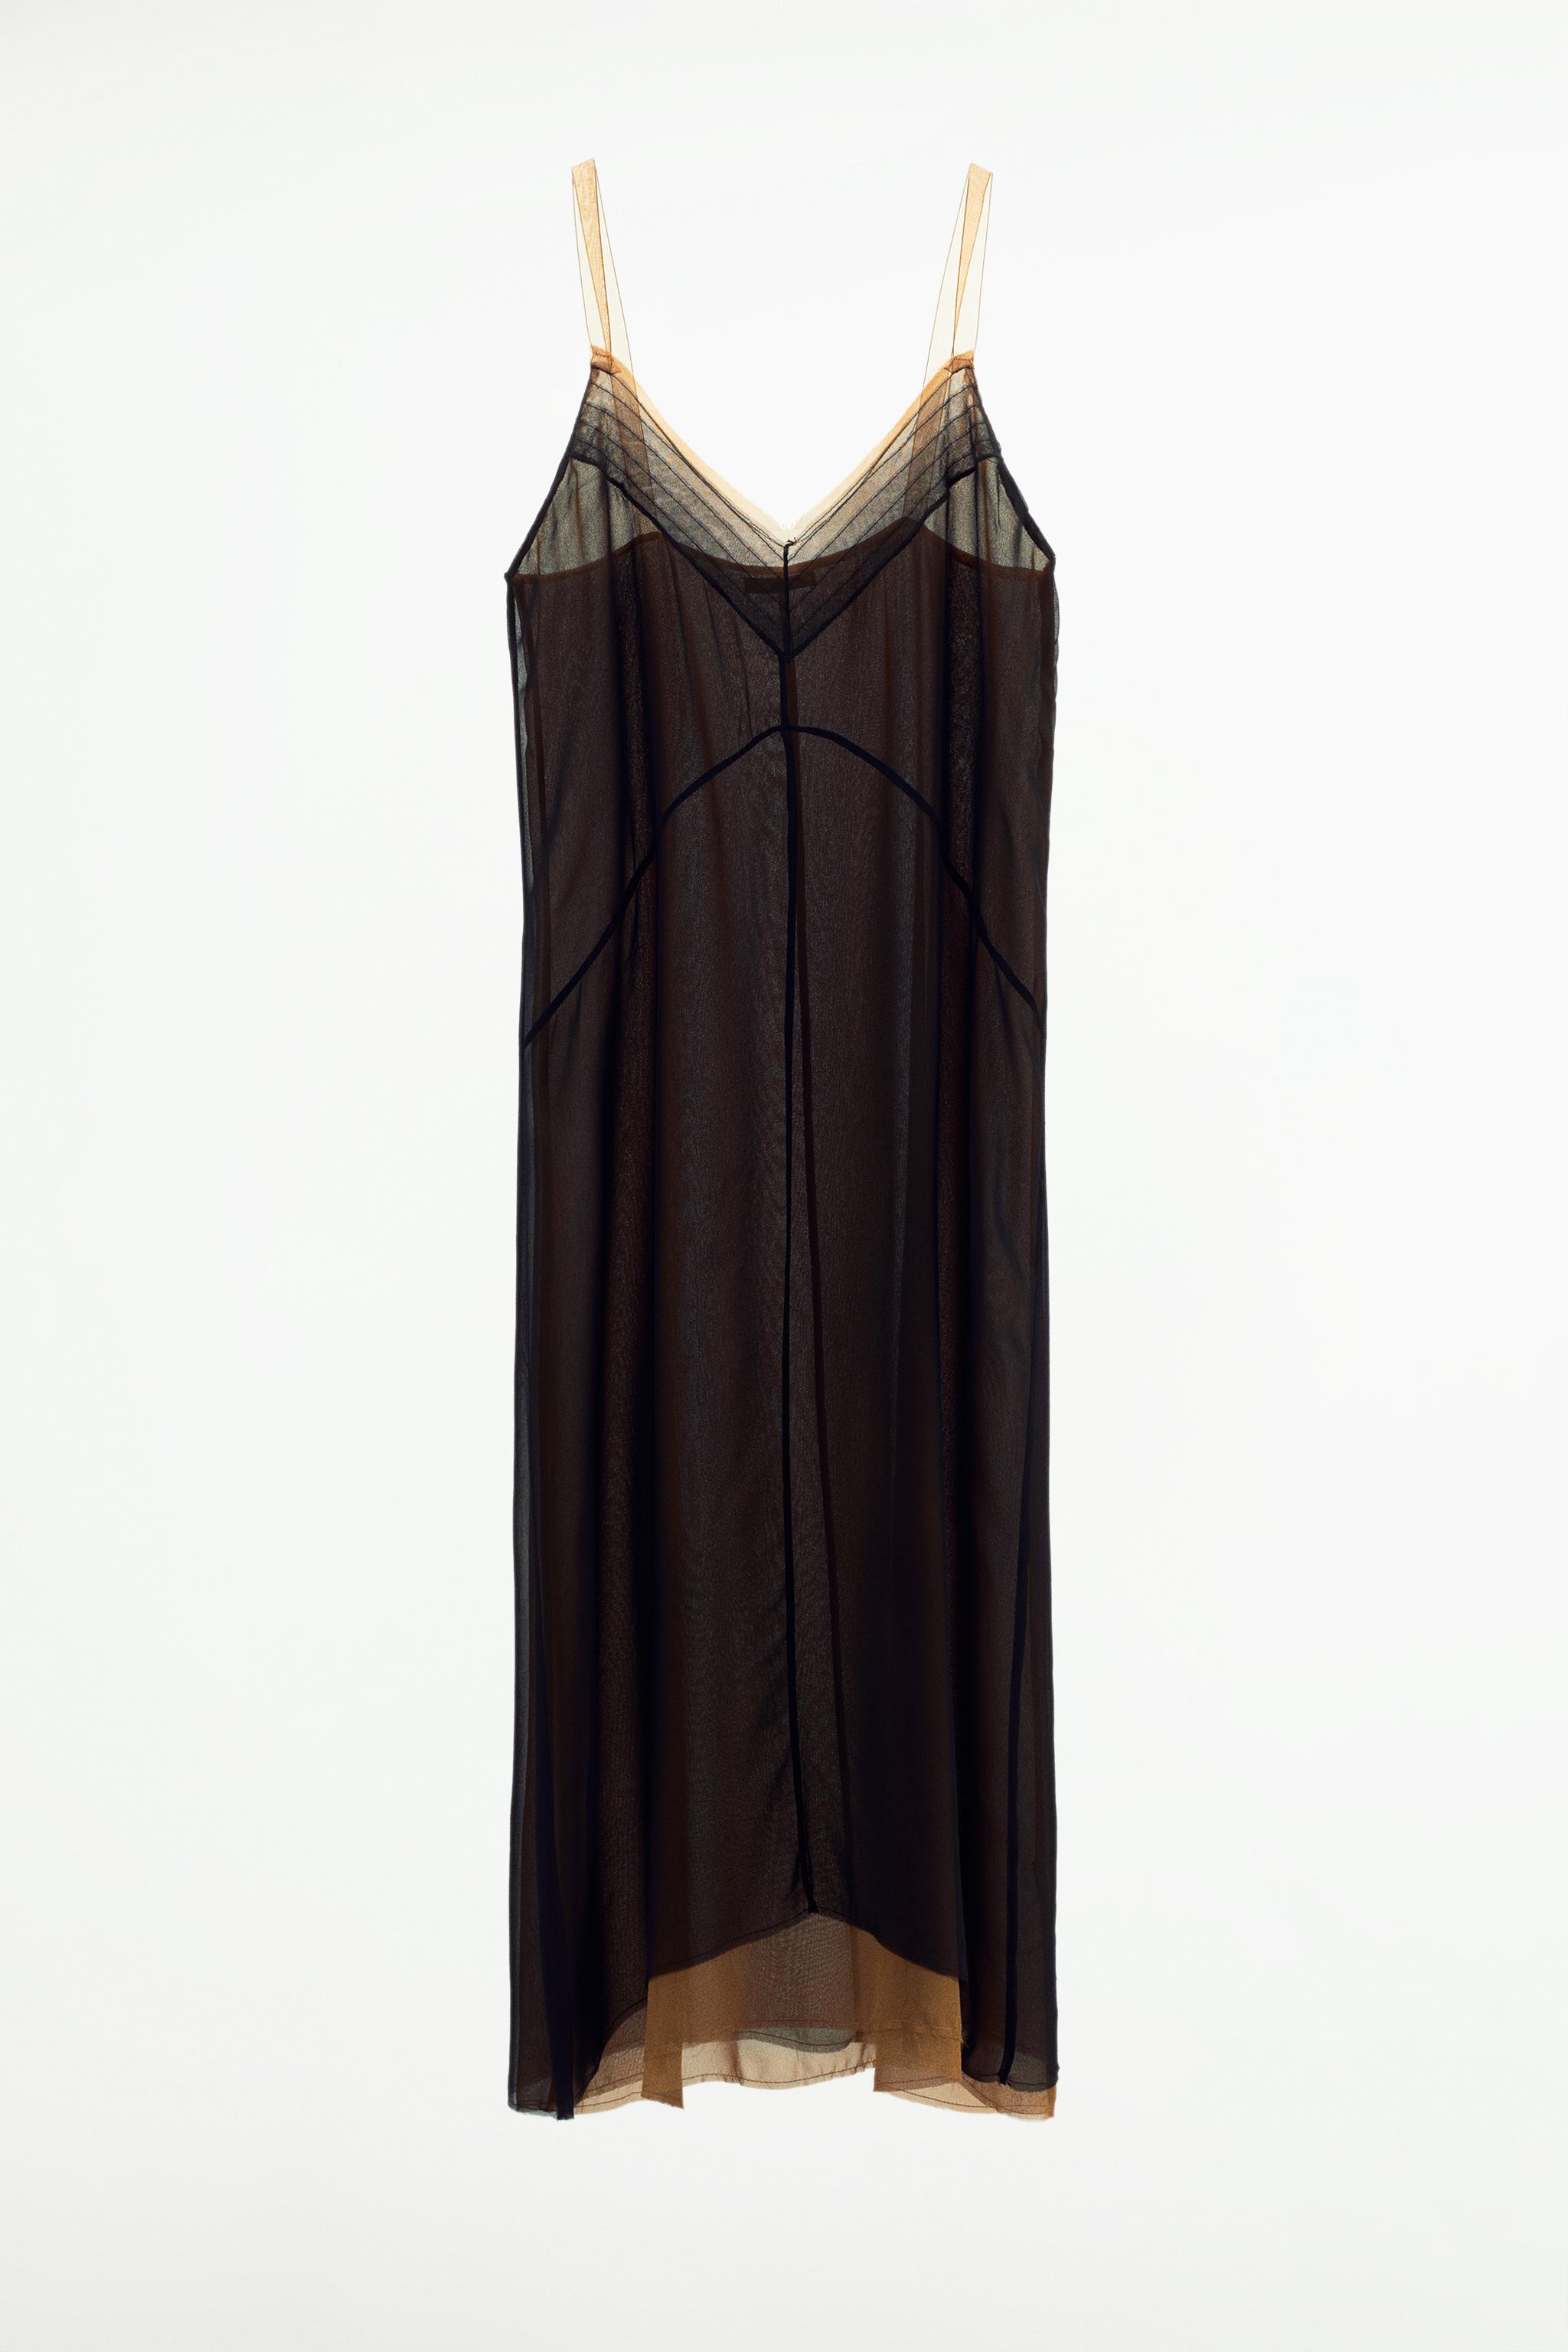 NWT Spanx Slim Cognito Full Slip Dress Style 392 Black Small Ret